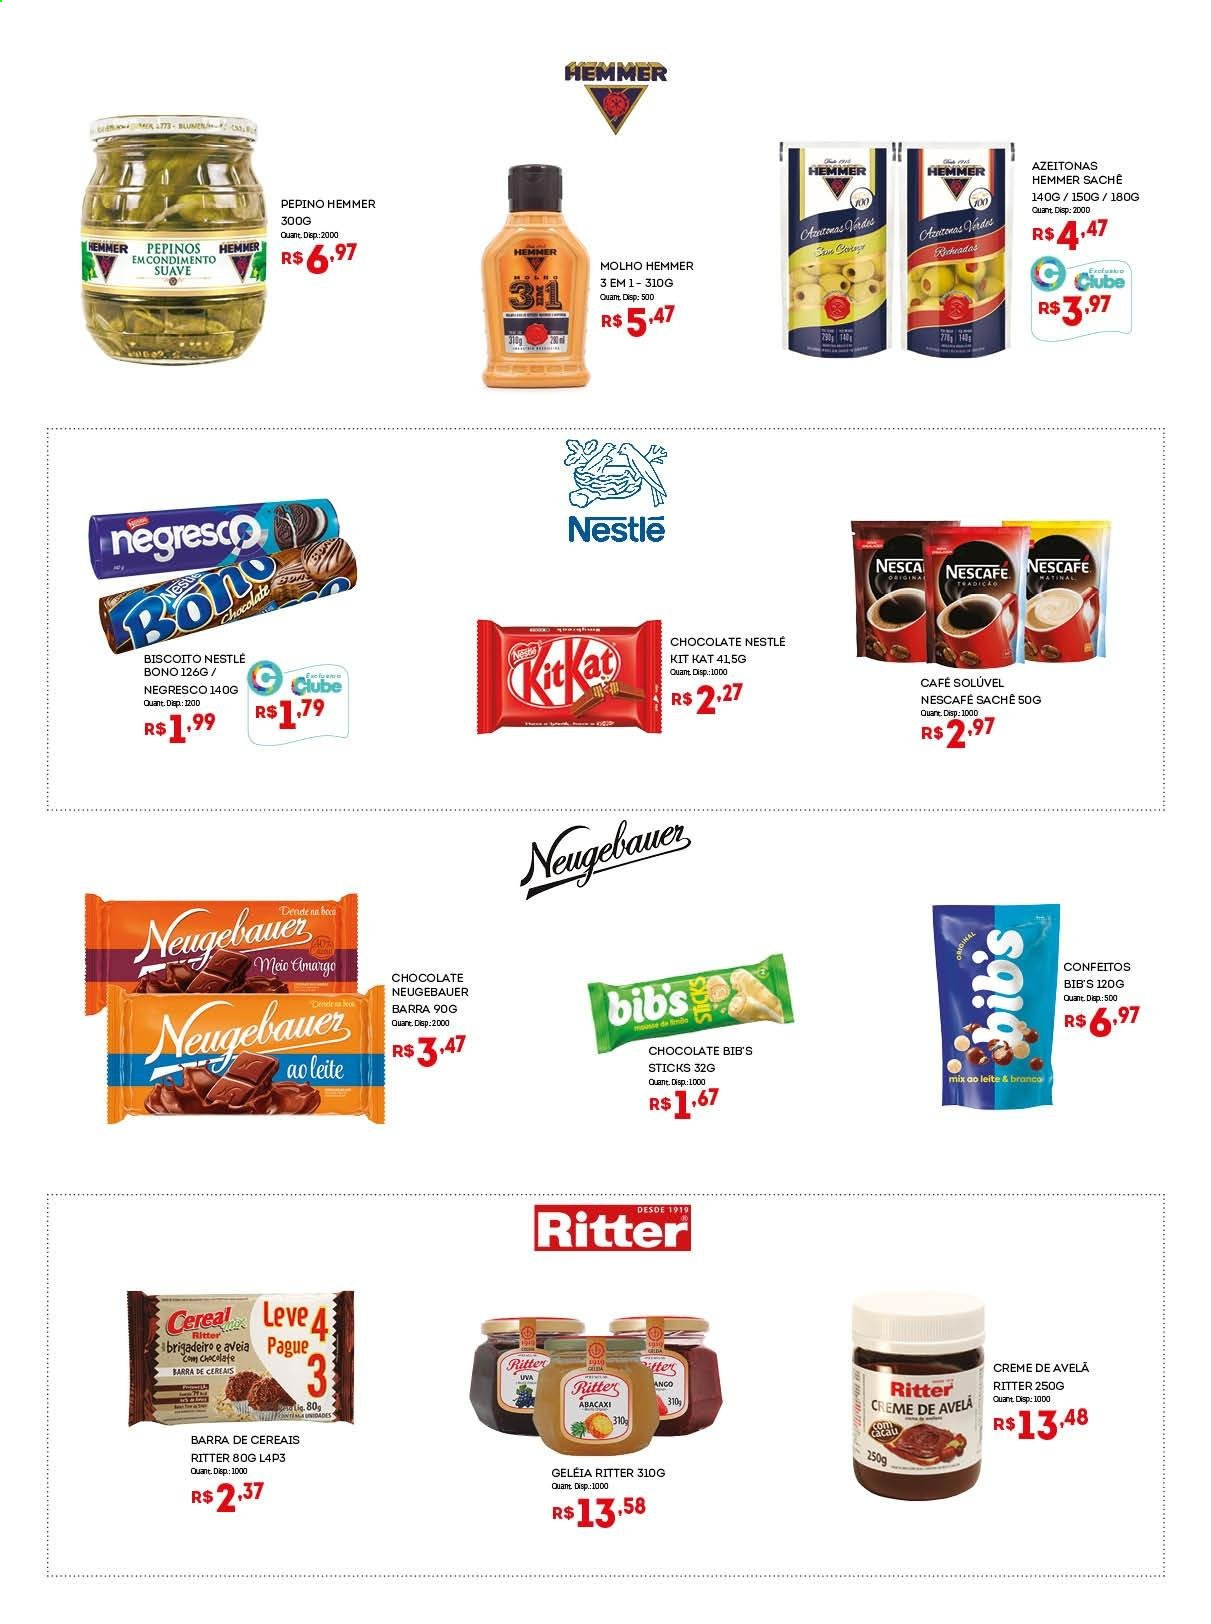 Encarte Bistek Supermercados  - 31.03.2021 - 13.04.2021.